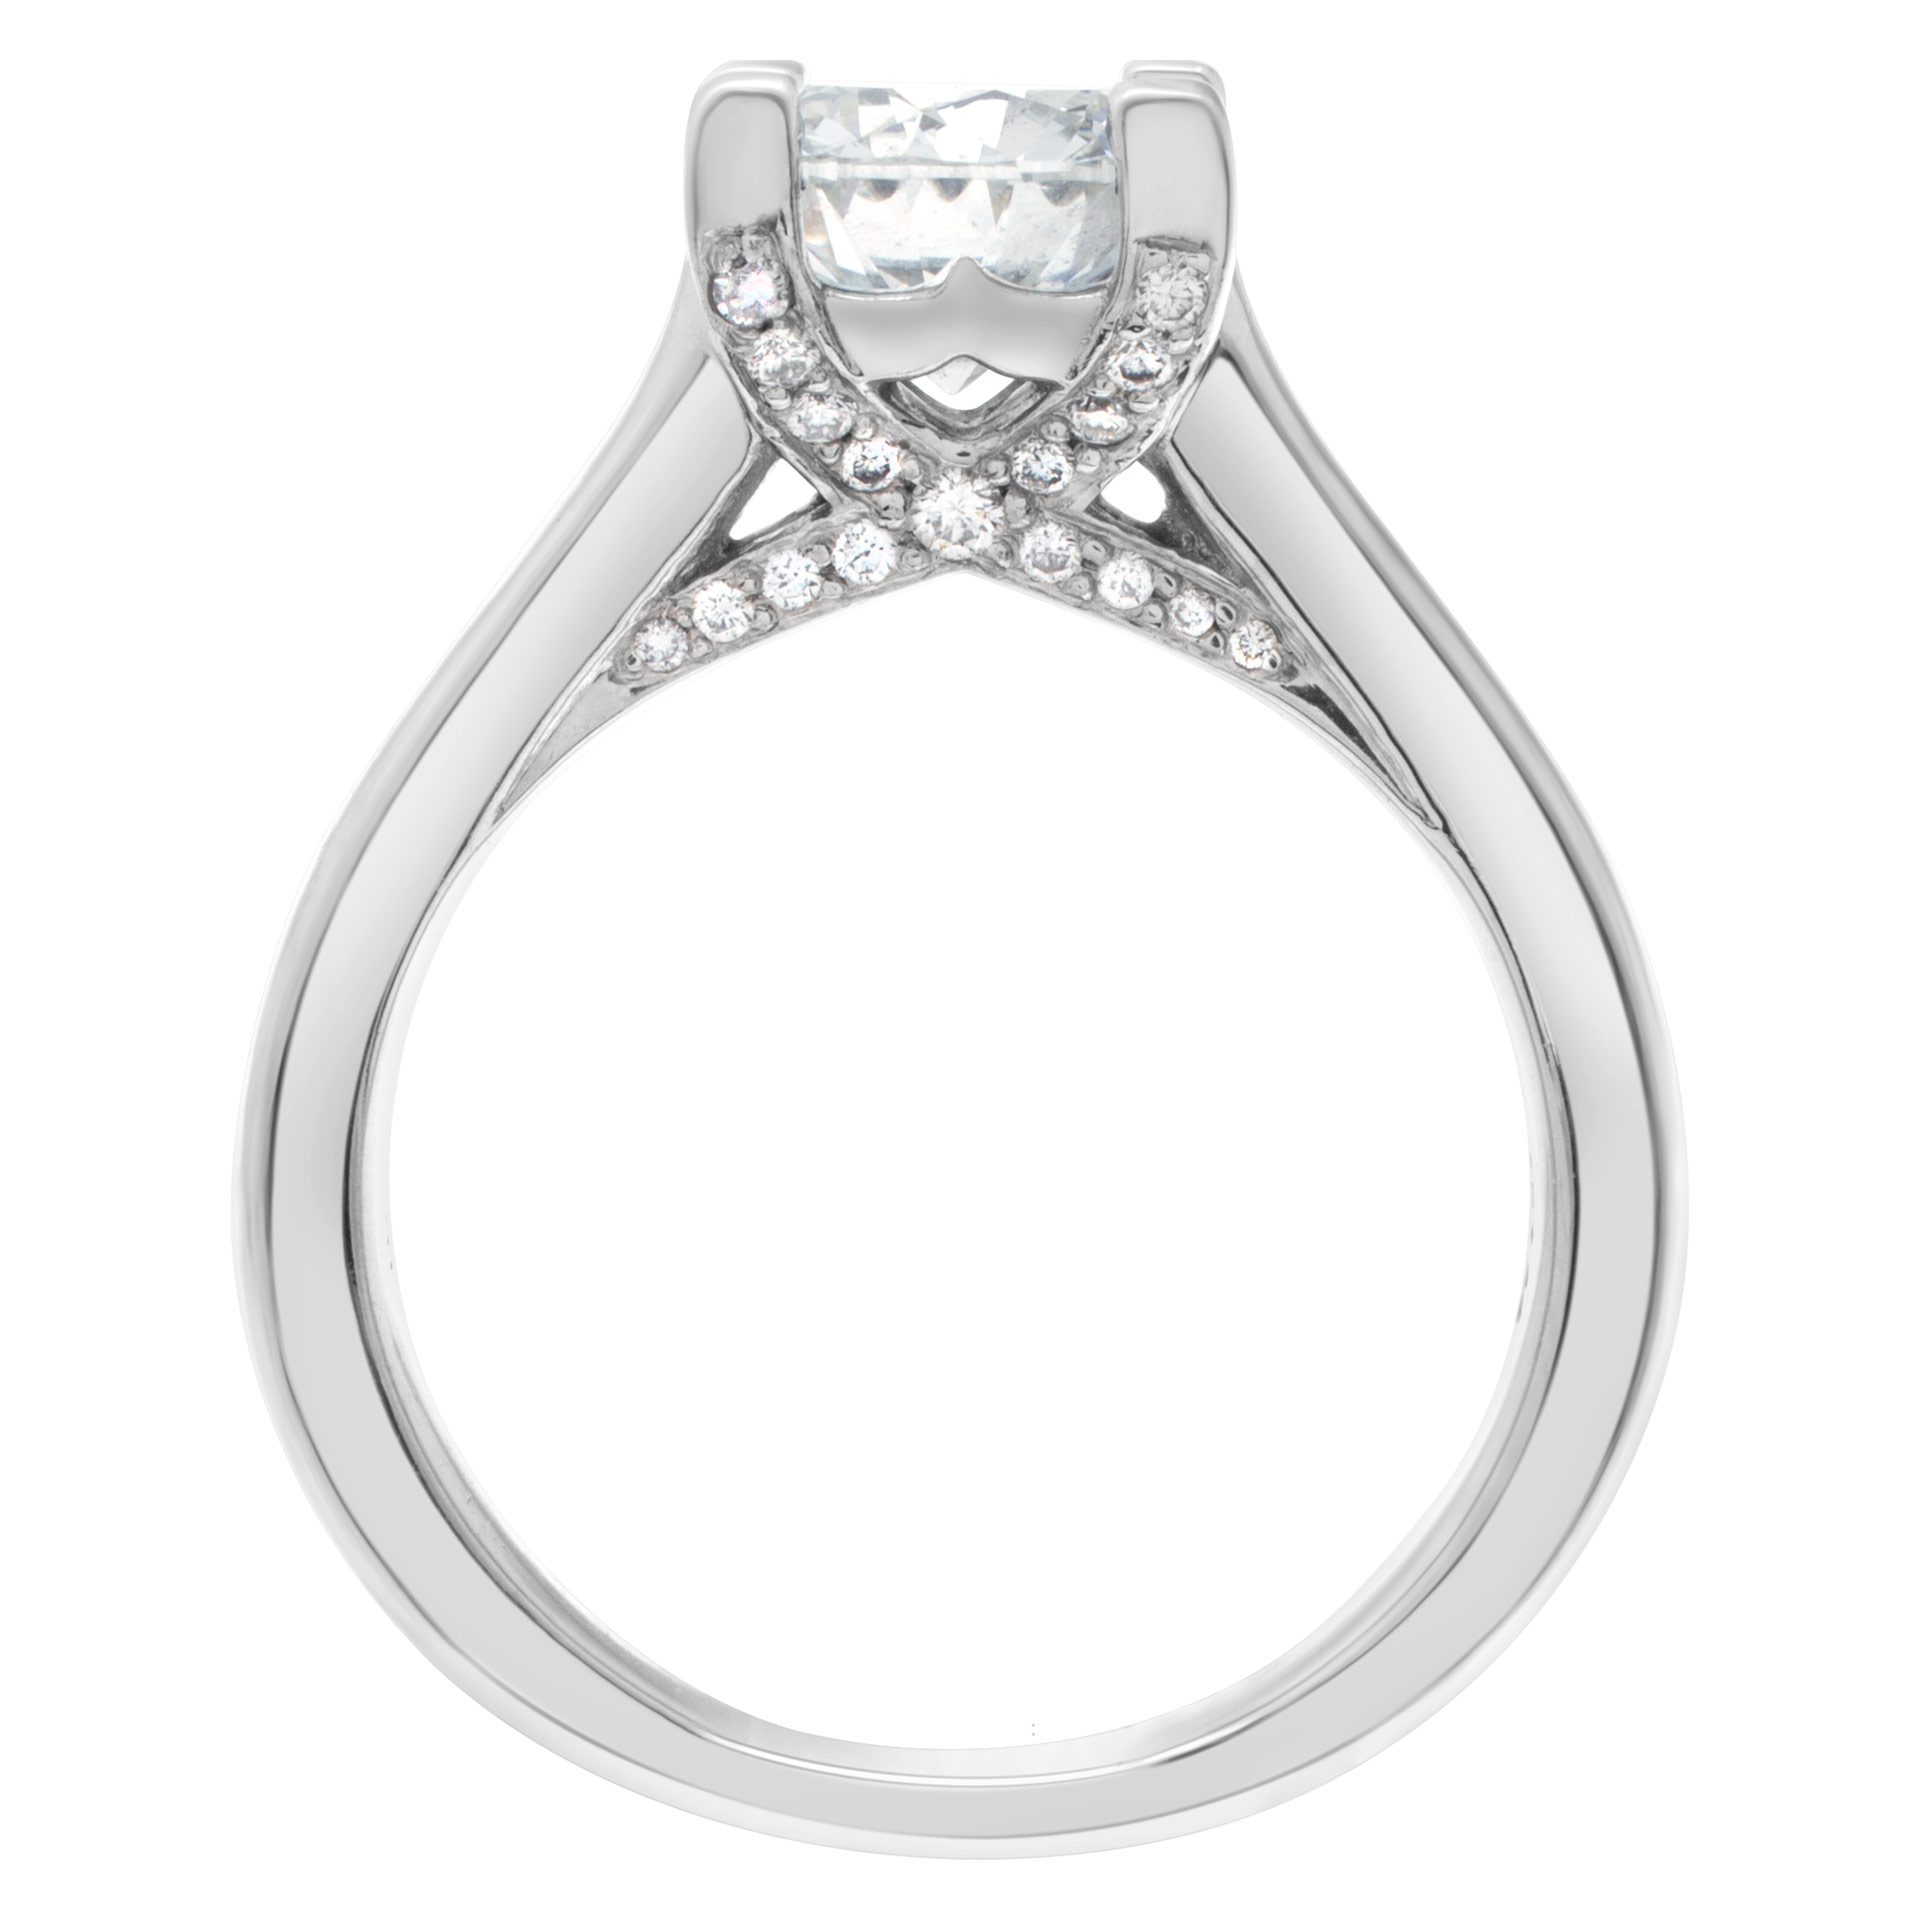 GIA certified round brilliant cut diamond 1.51 carat (I color, VS2 clarity) ring image 4